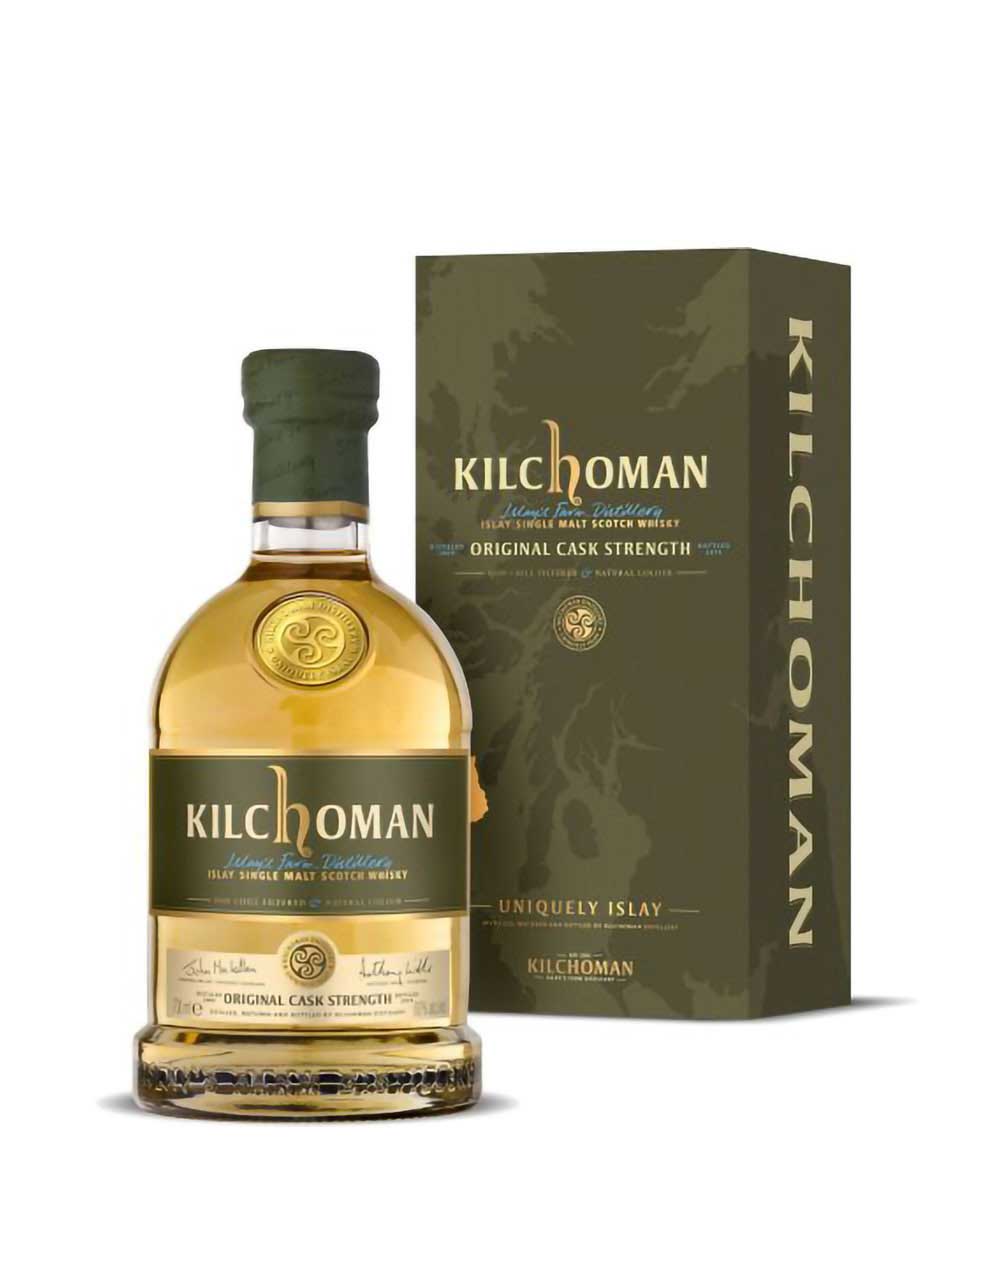 Kilchoman Original Cask Strength Islay Single Malt Scotch Whisky